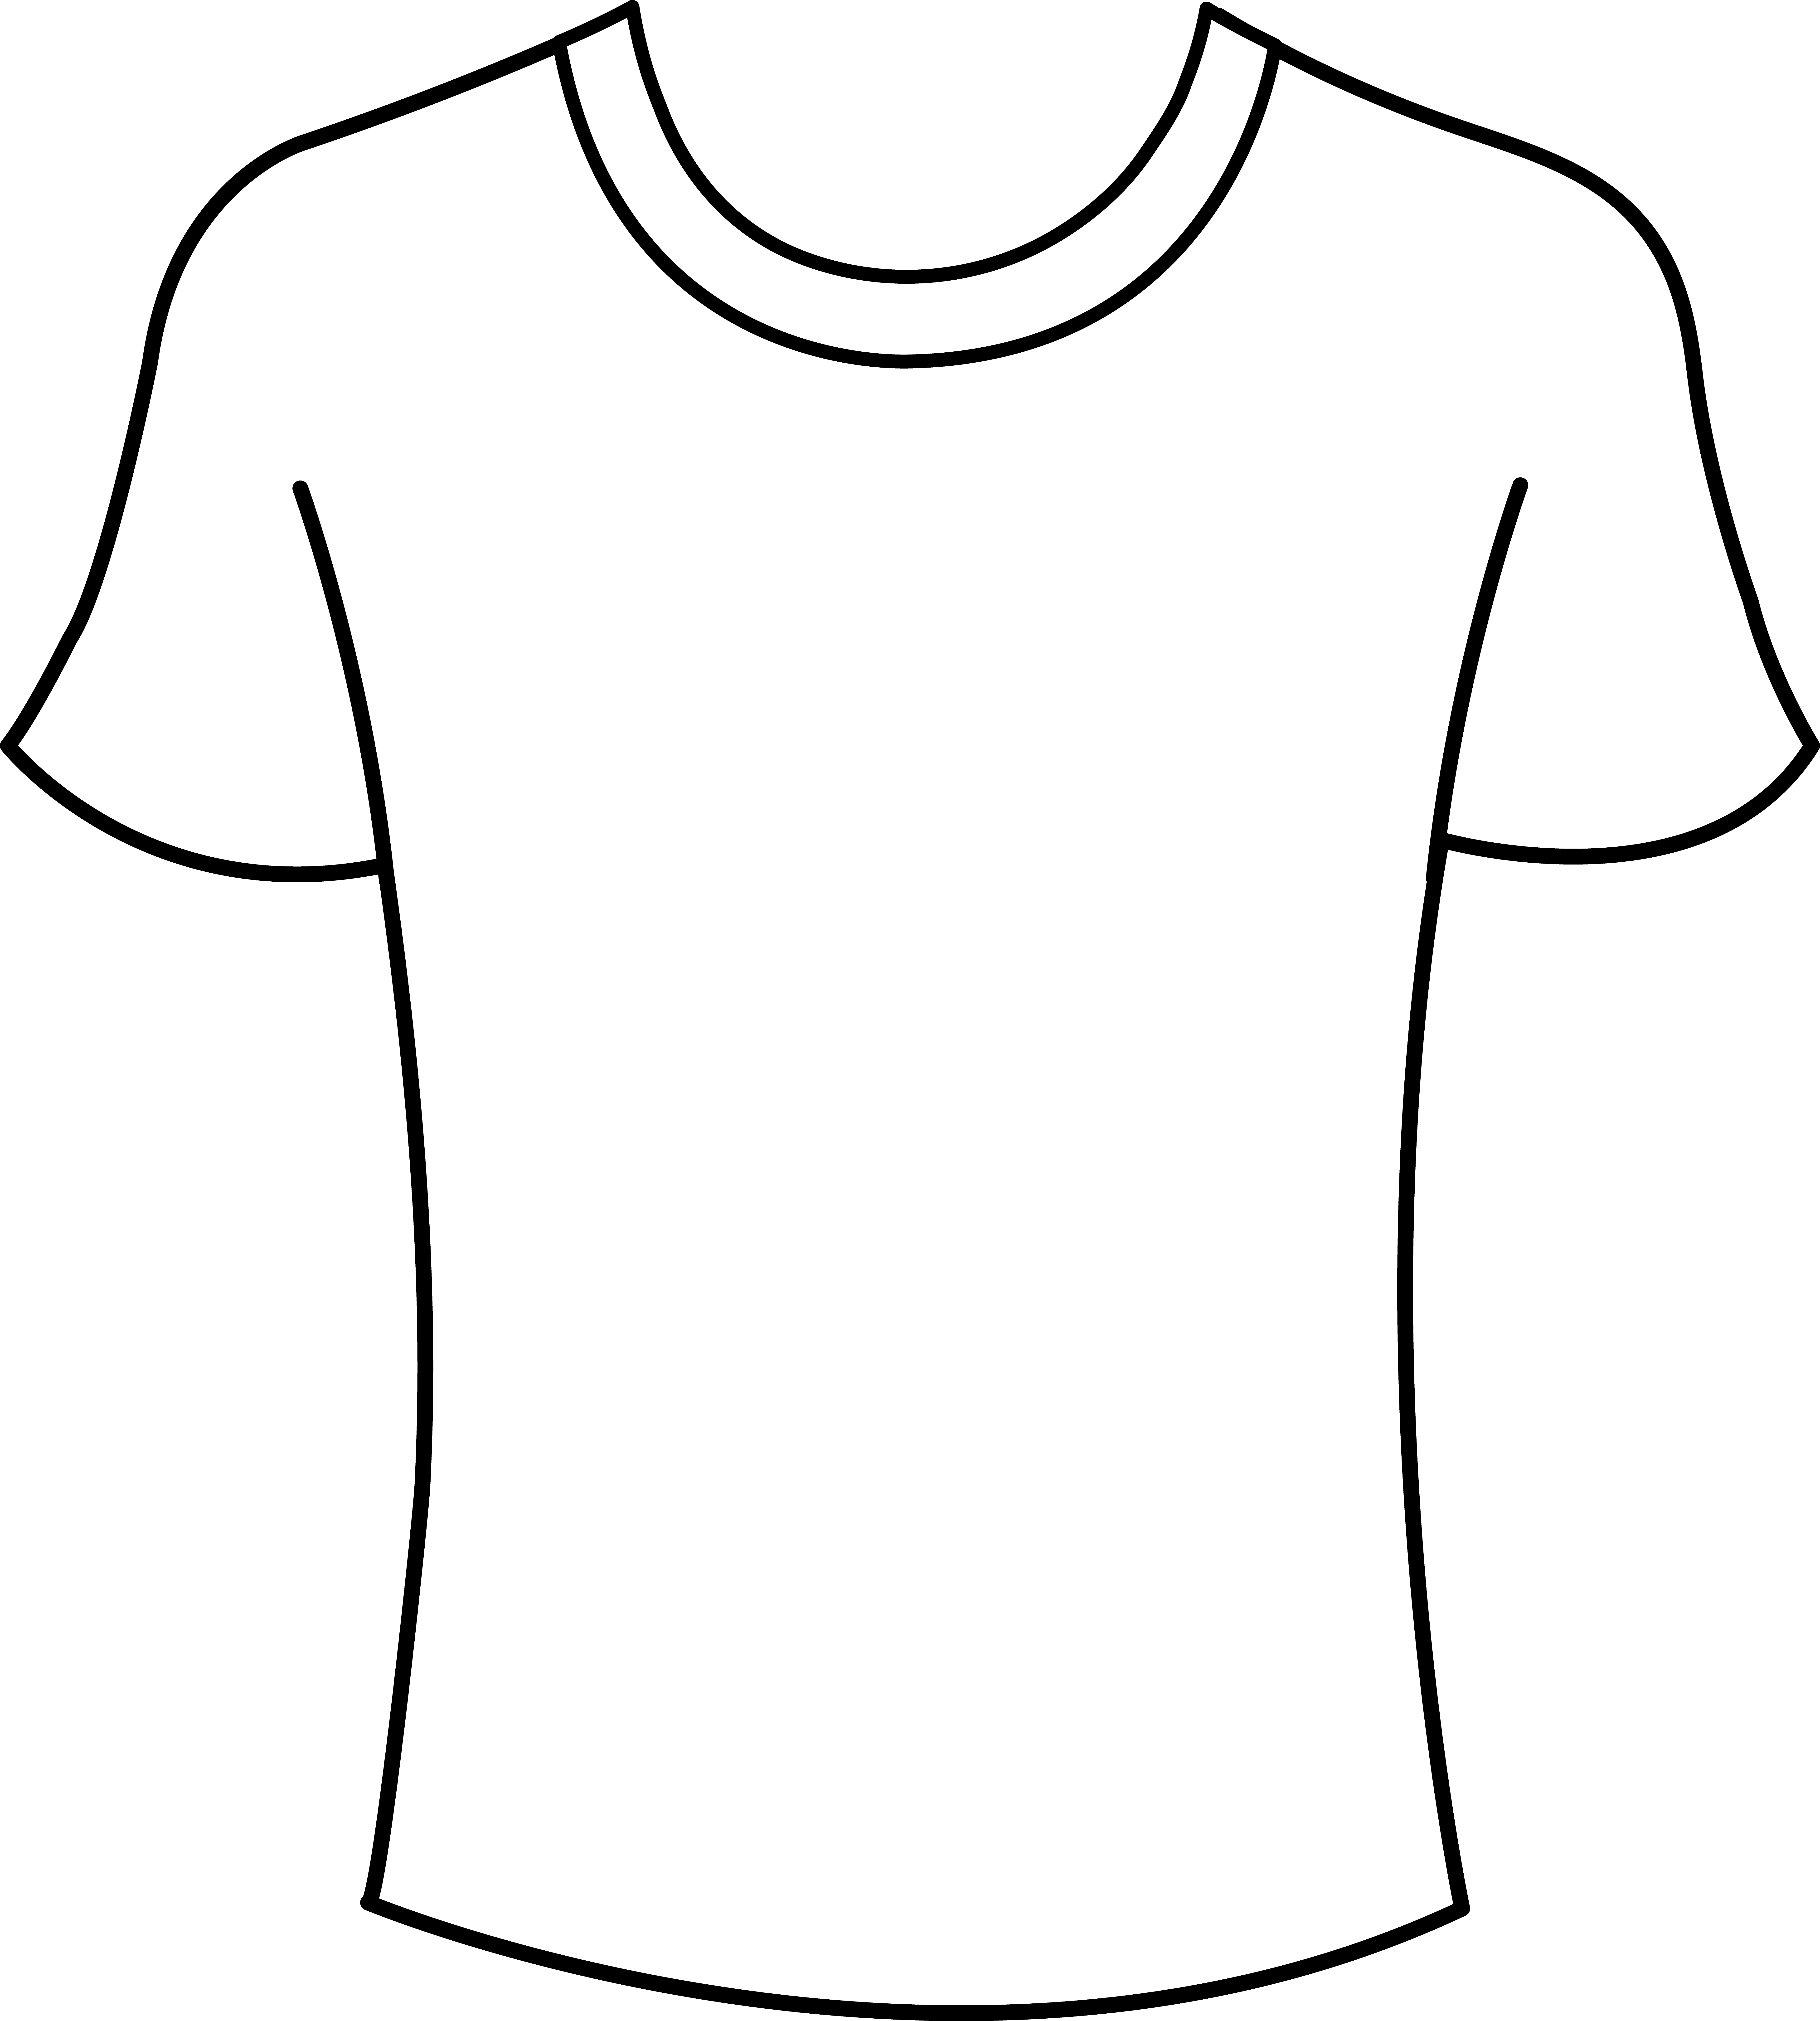 T shirt black shirt clip art free vector in open office drawing